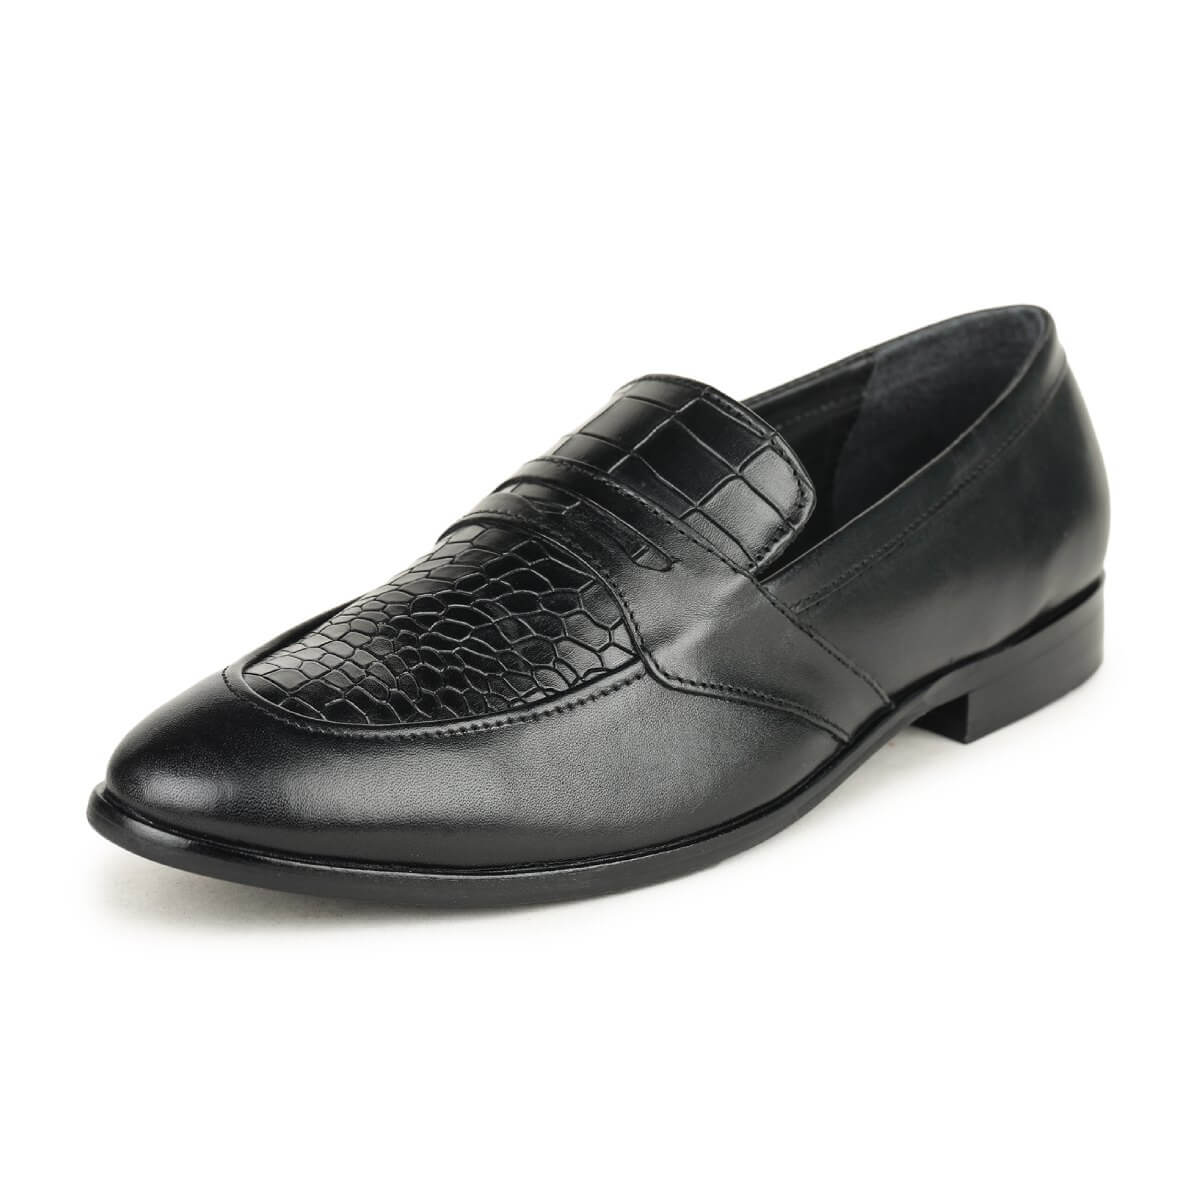 textured black slip on formal shoes